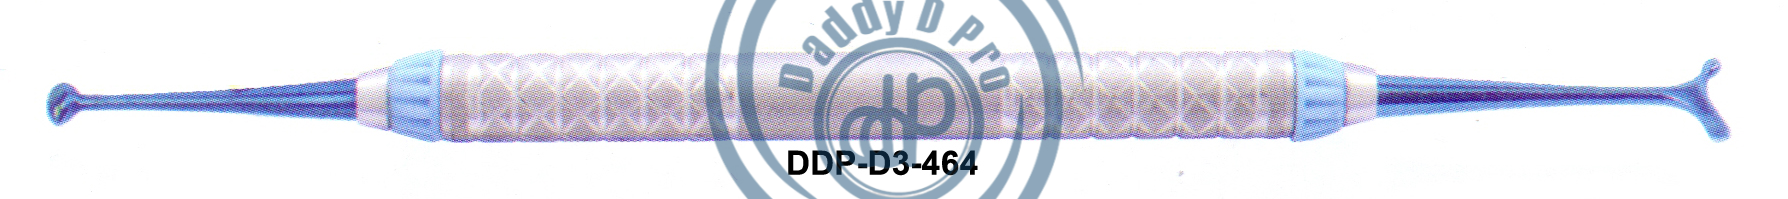 images/DDP-D3-464.png